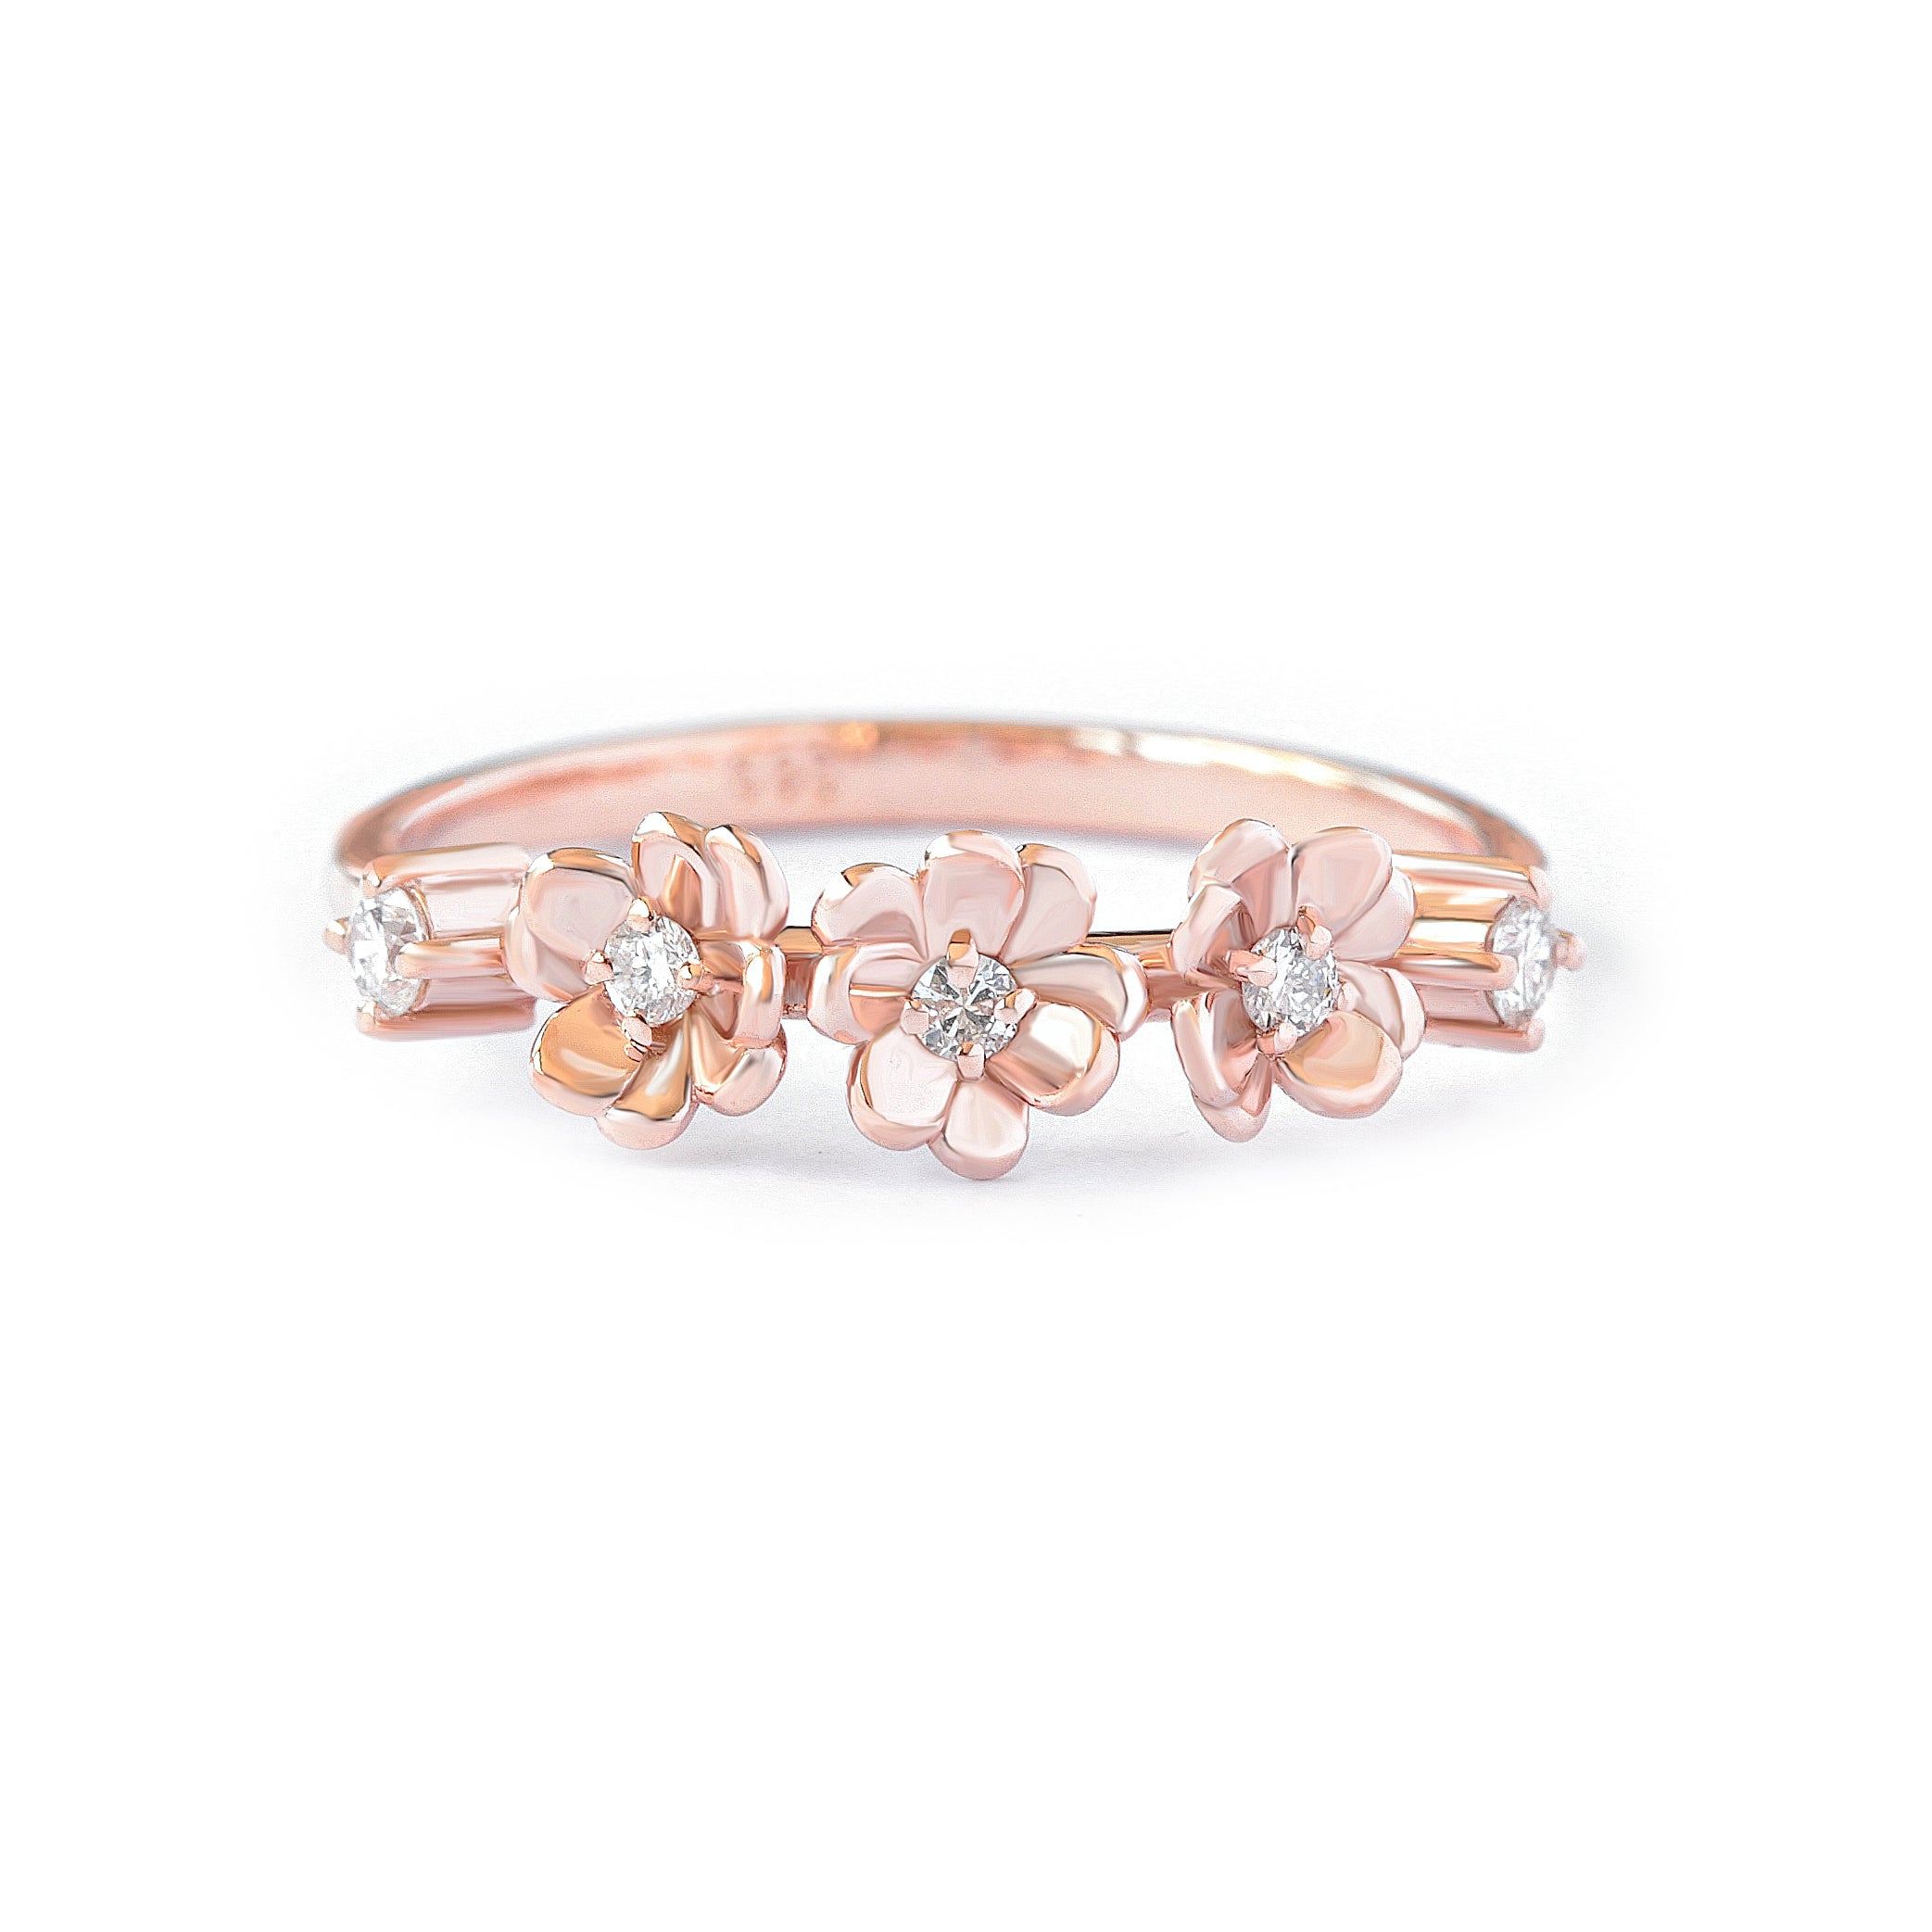 Flower Diamond Wedding Ring, 14K Rose Gold, Size 6.5, READY TO SHIP!